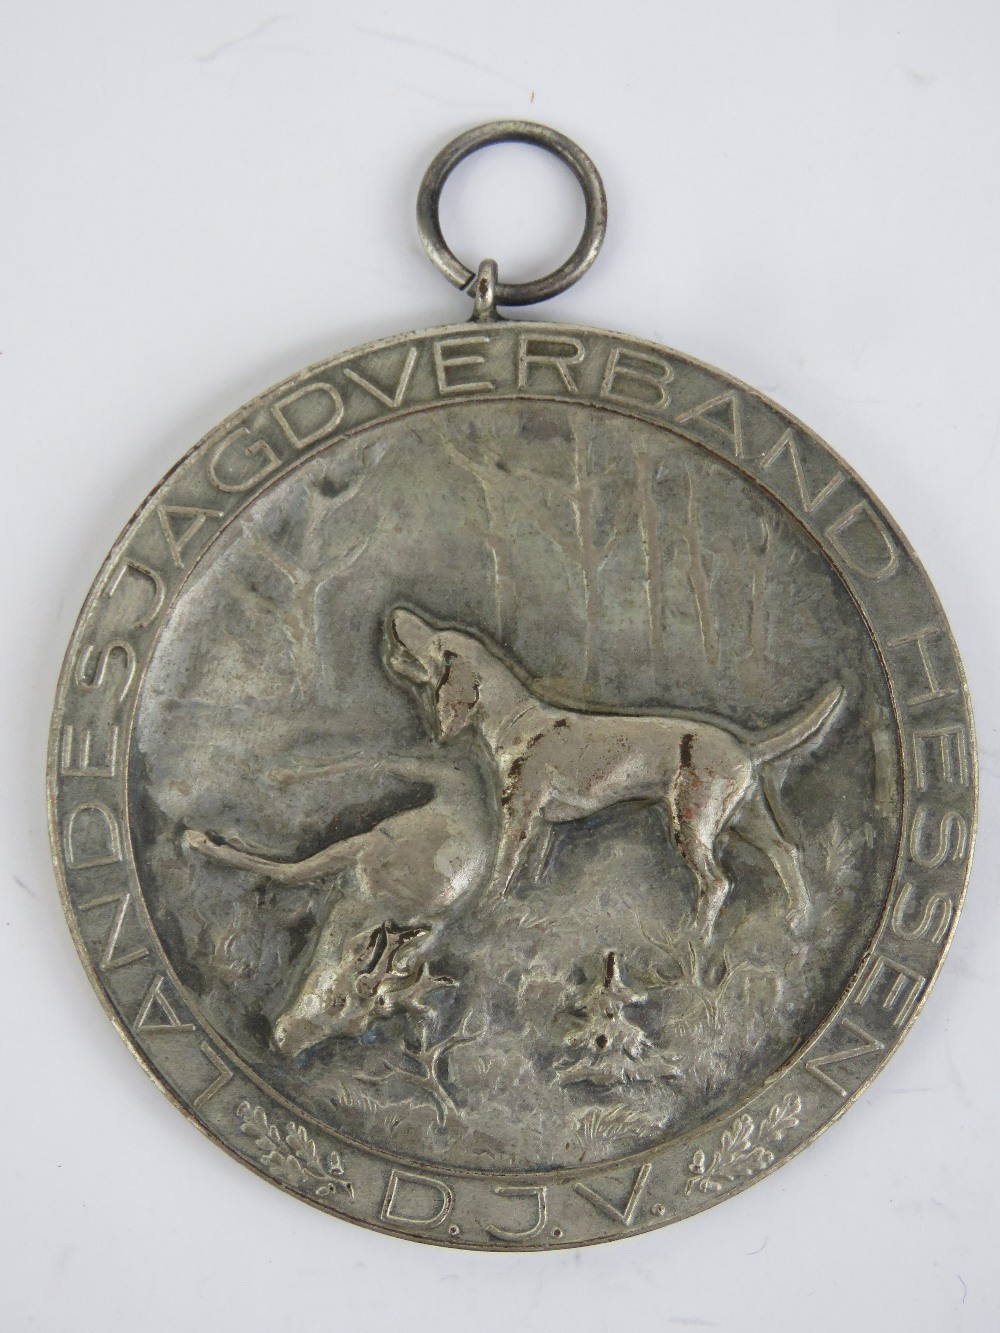 A German hunting award medal in box.